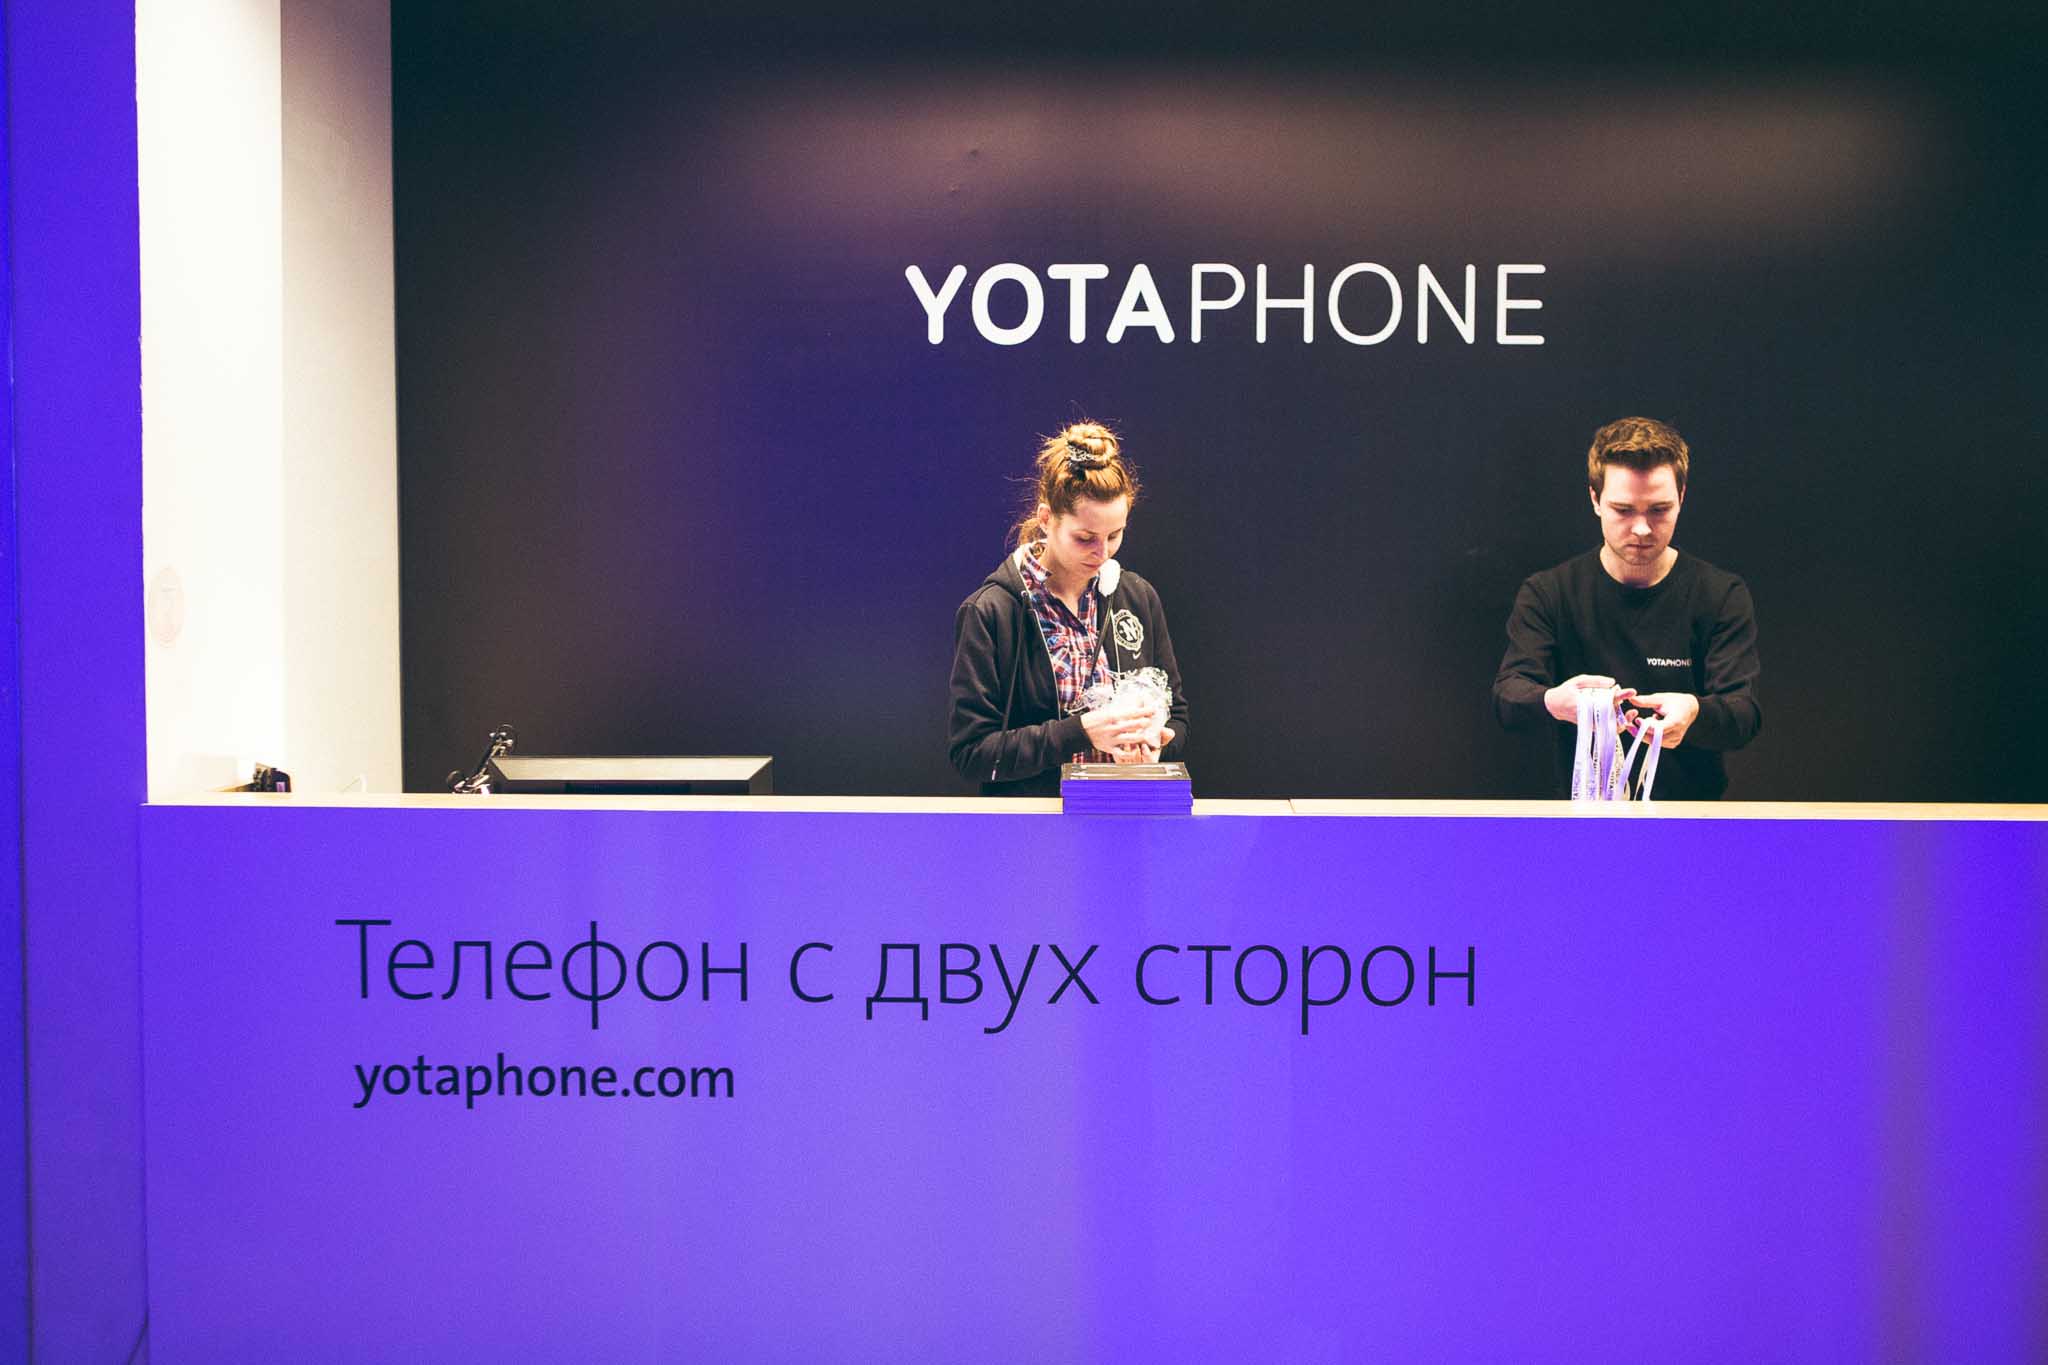 yp_20141202_153857_презентация_Event_yota_yotaphone_Urban_moscow